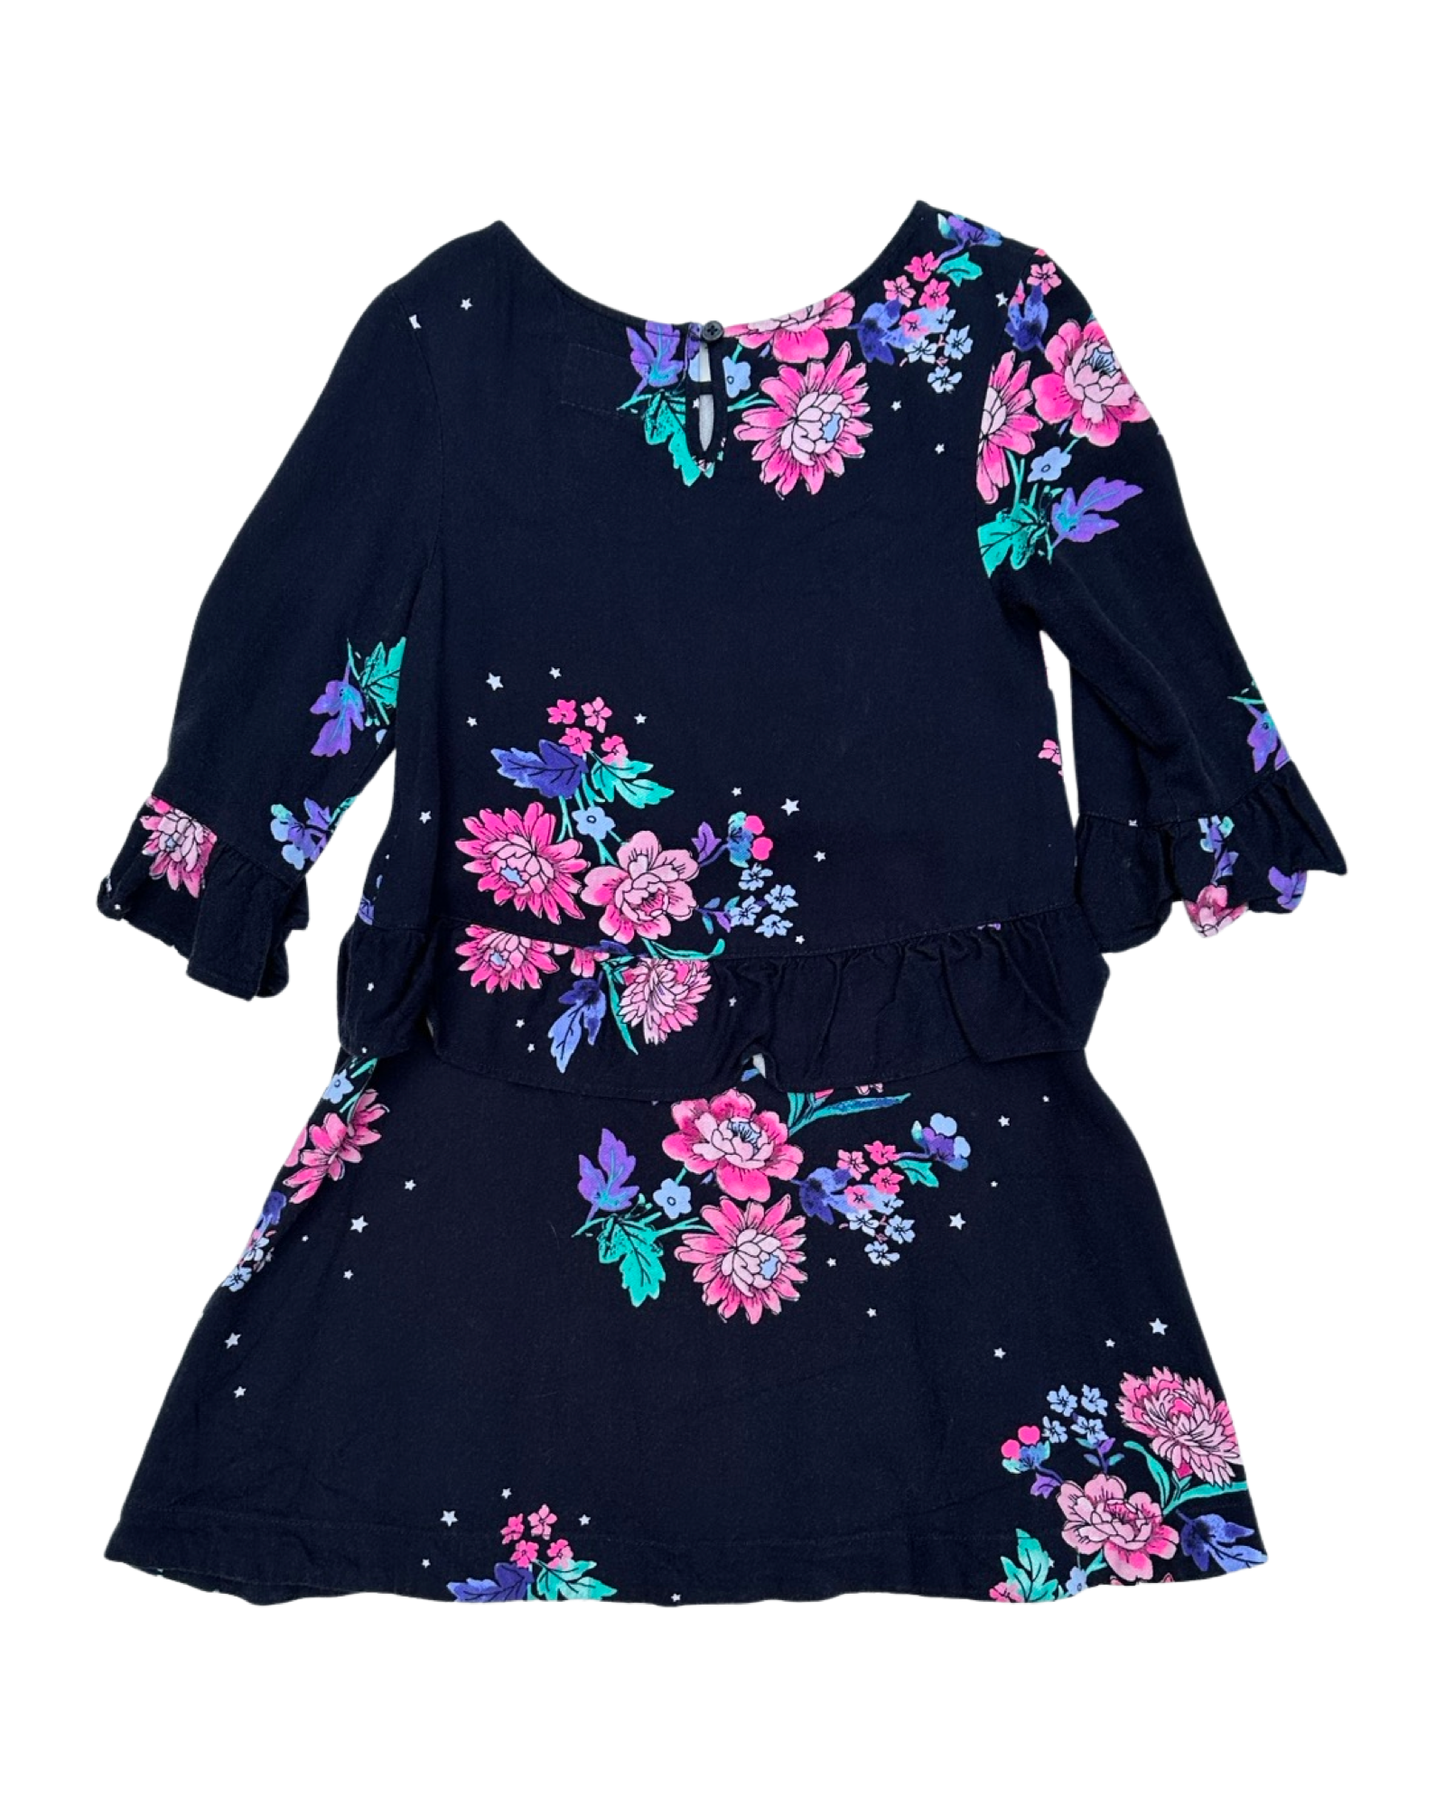 Joules floral print dress (size 4-5yrs)